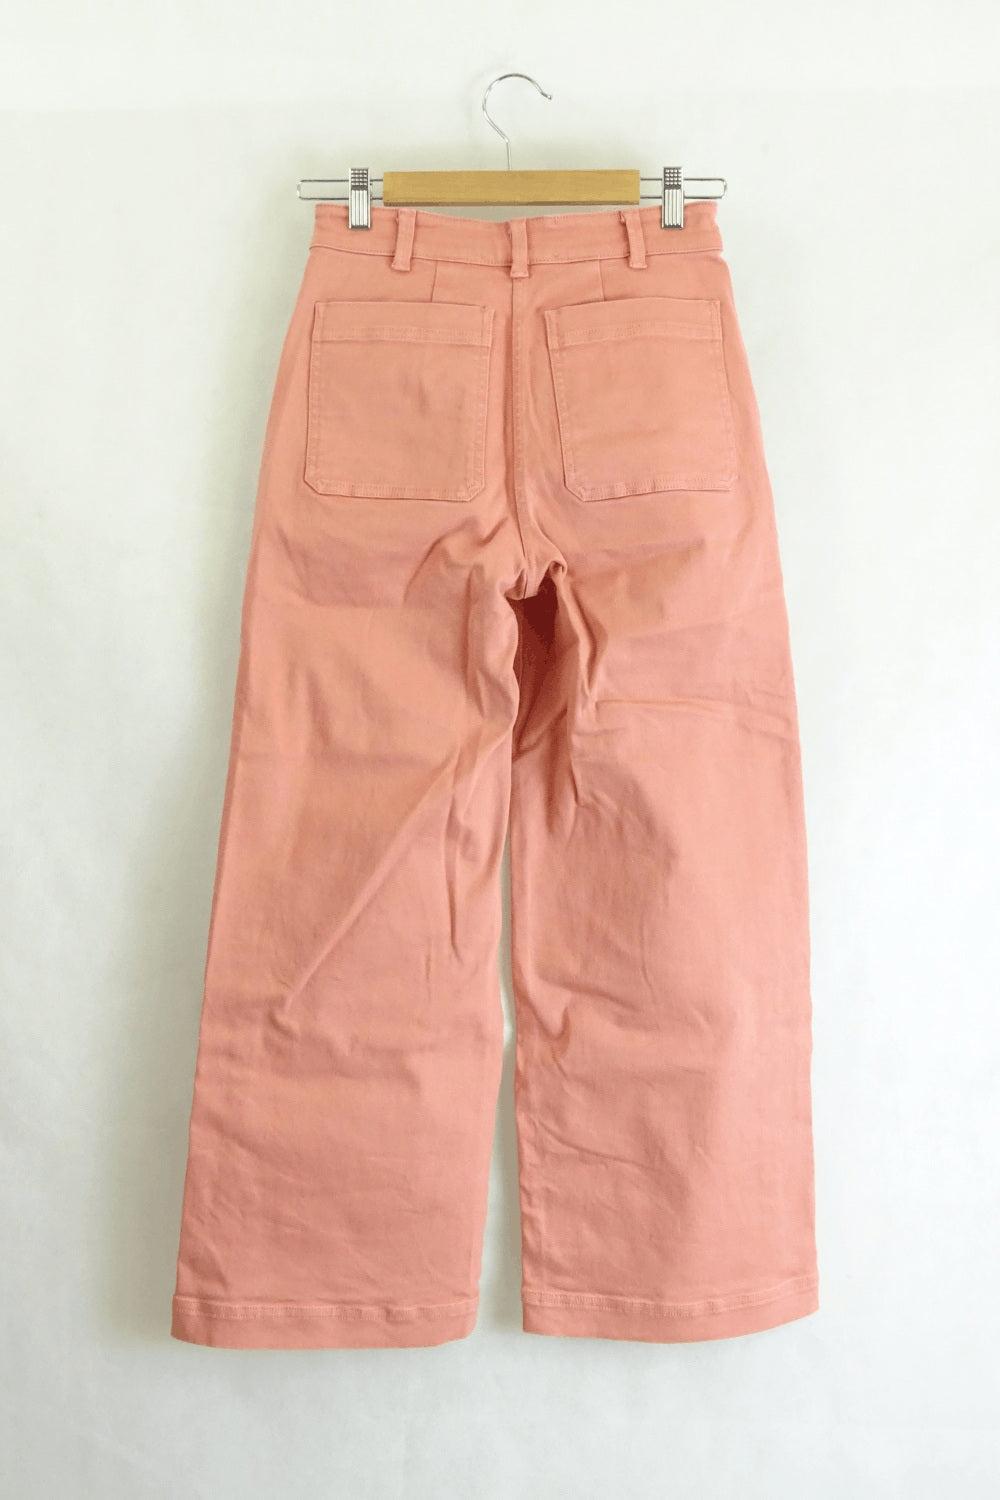 Everlane Peach Wide-Leg Jeans XS